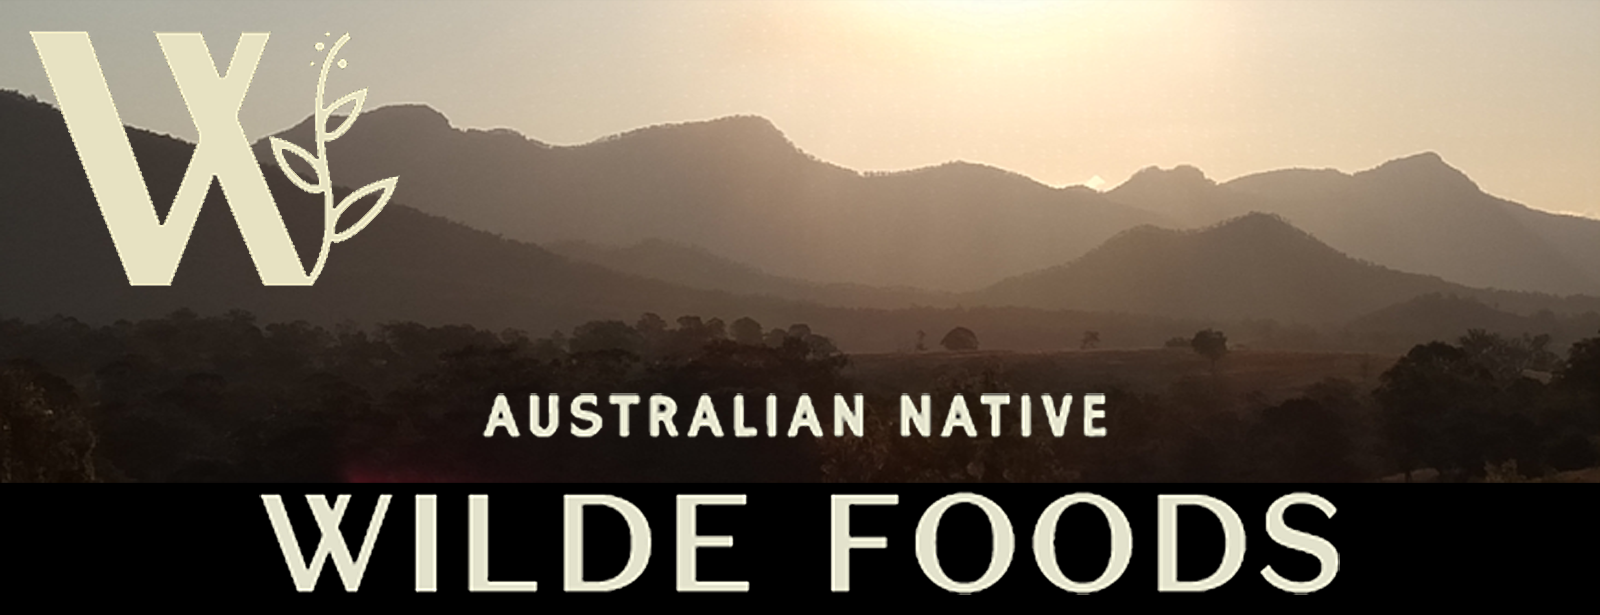 Wilde Foods Australian Native